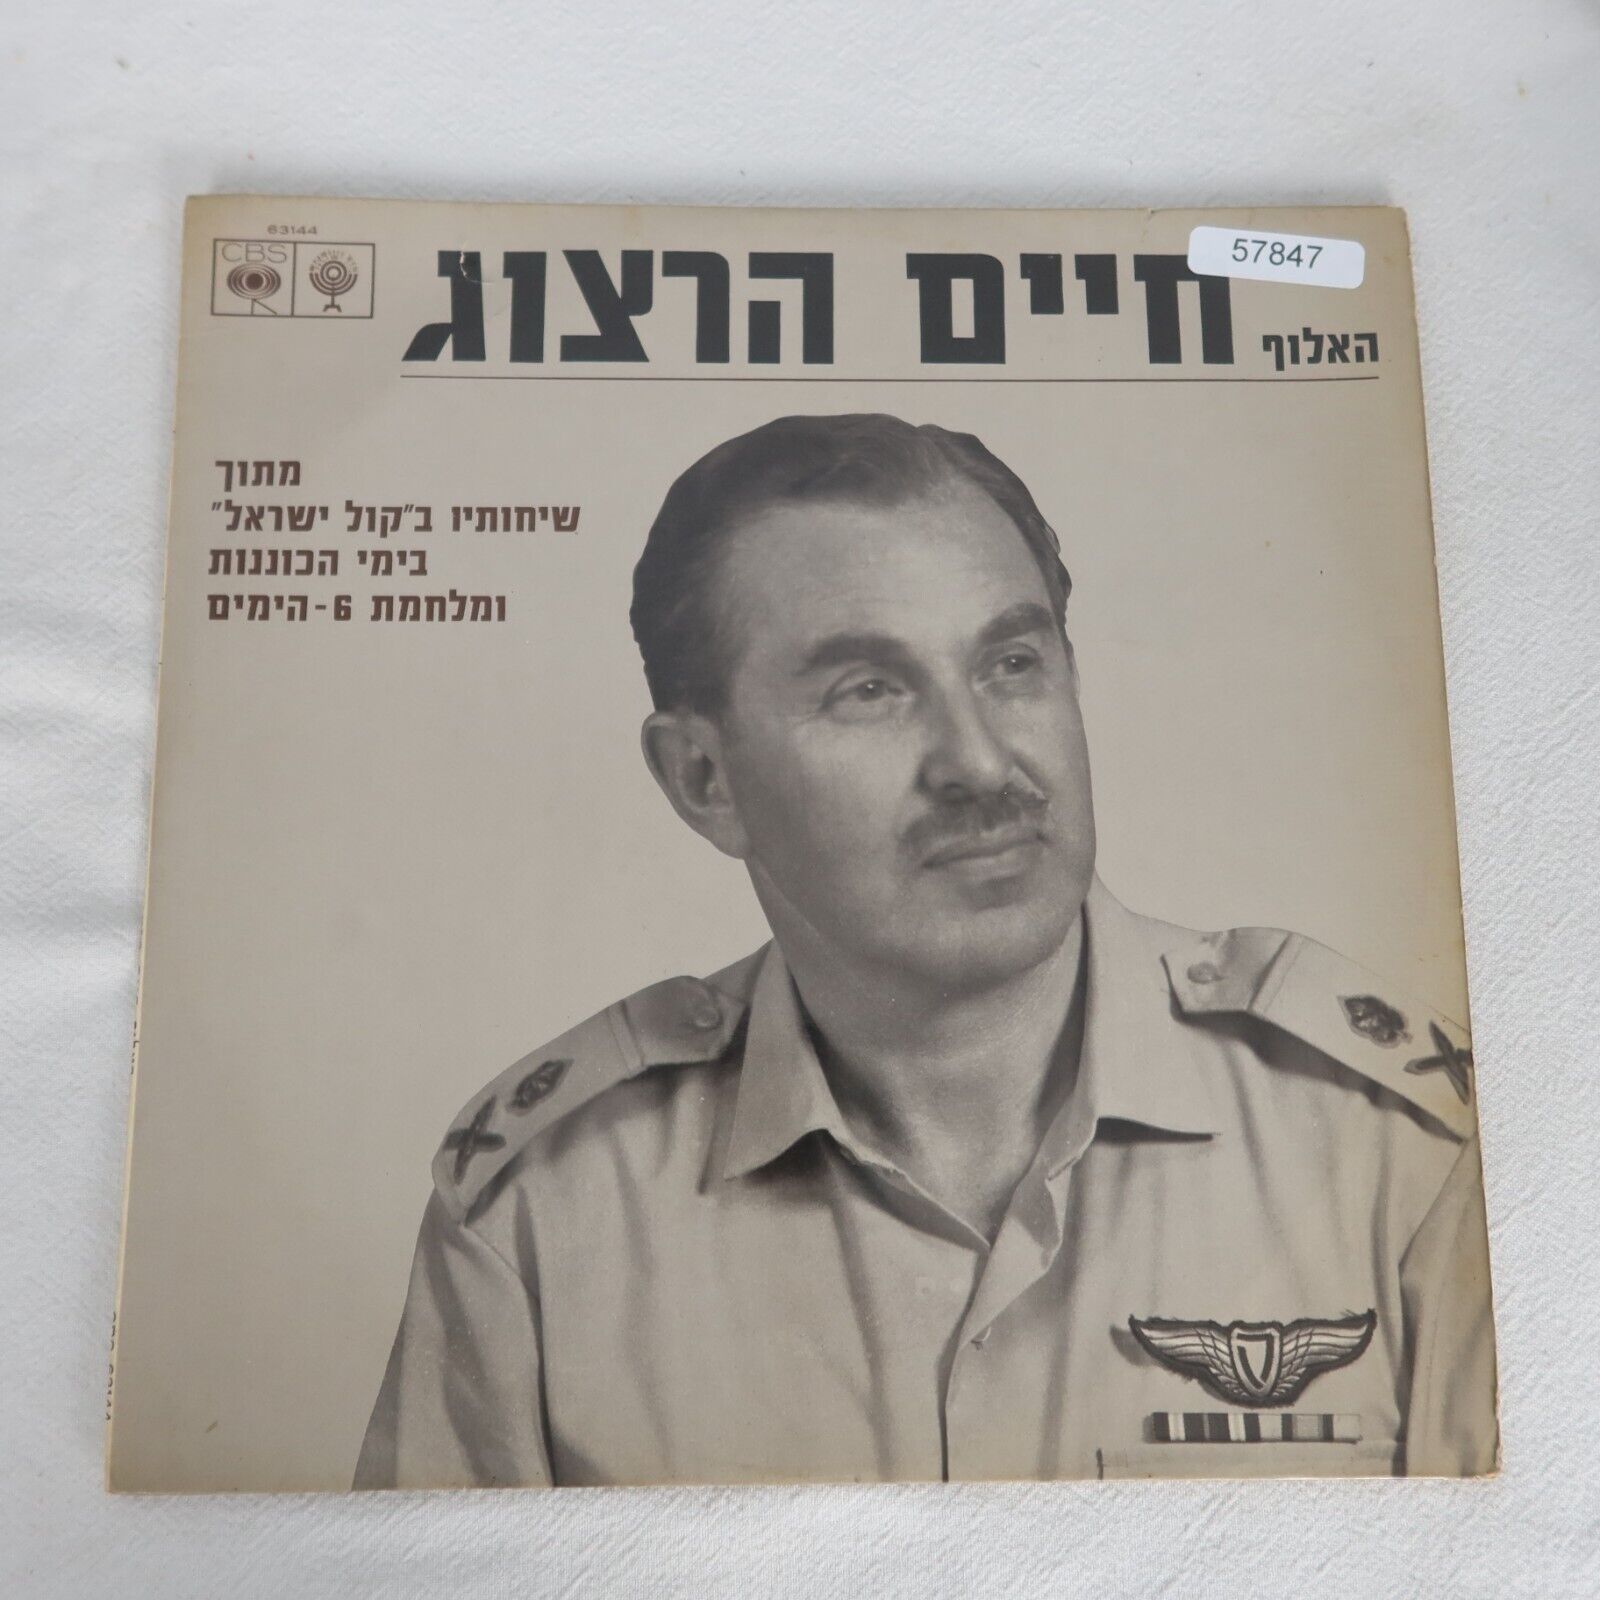 Haim Herzog The Champion His Talks On Voice Of Israel LP Vinyl Record Album